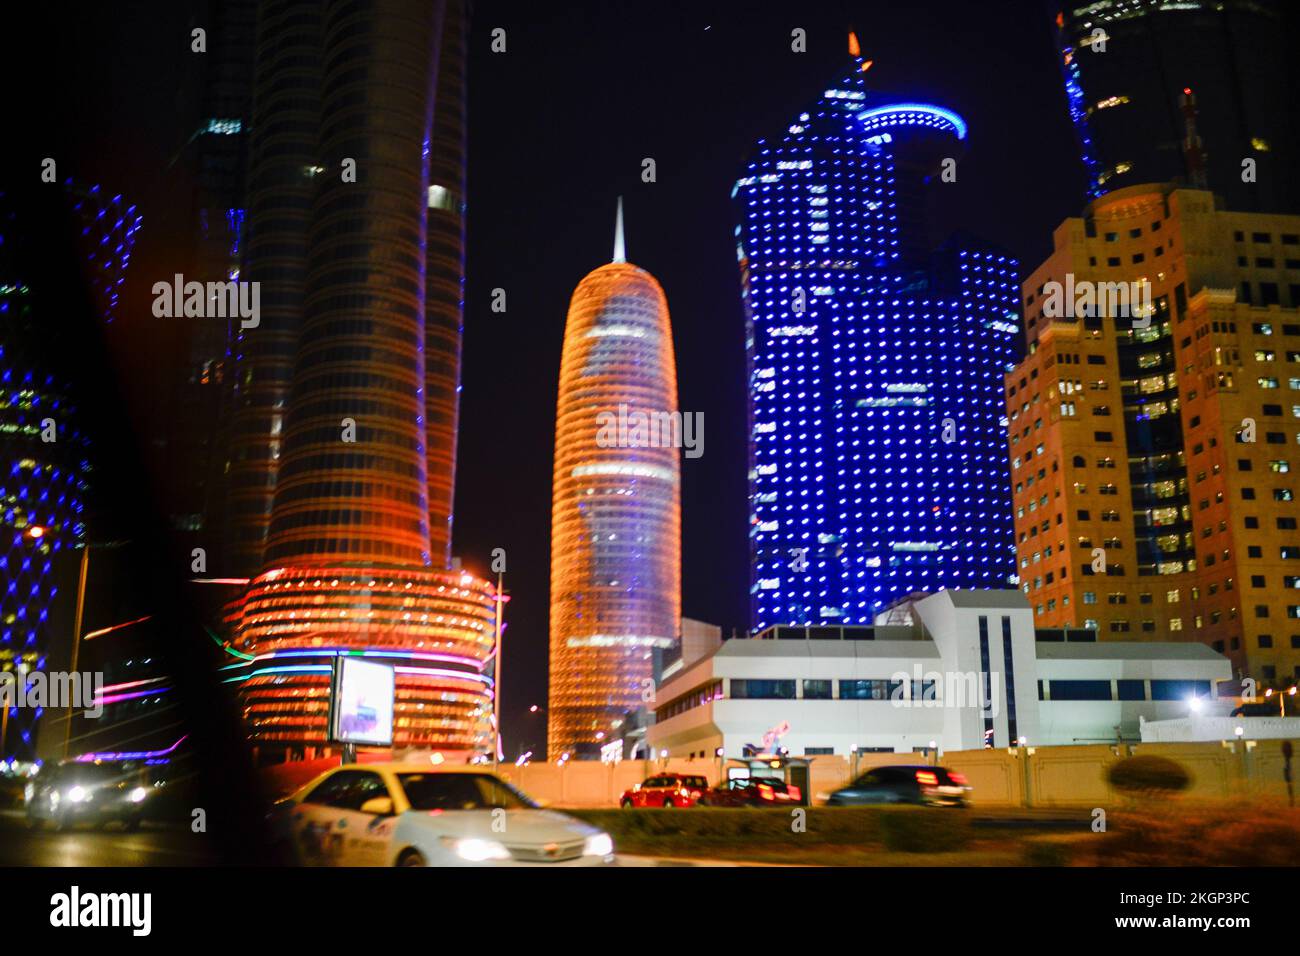 QATAR, Doha, gratte-ciel de la baie est, flou / KATAR, Doha, Wolkenkratzer der Eastbay, verwischt Banque D'Images